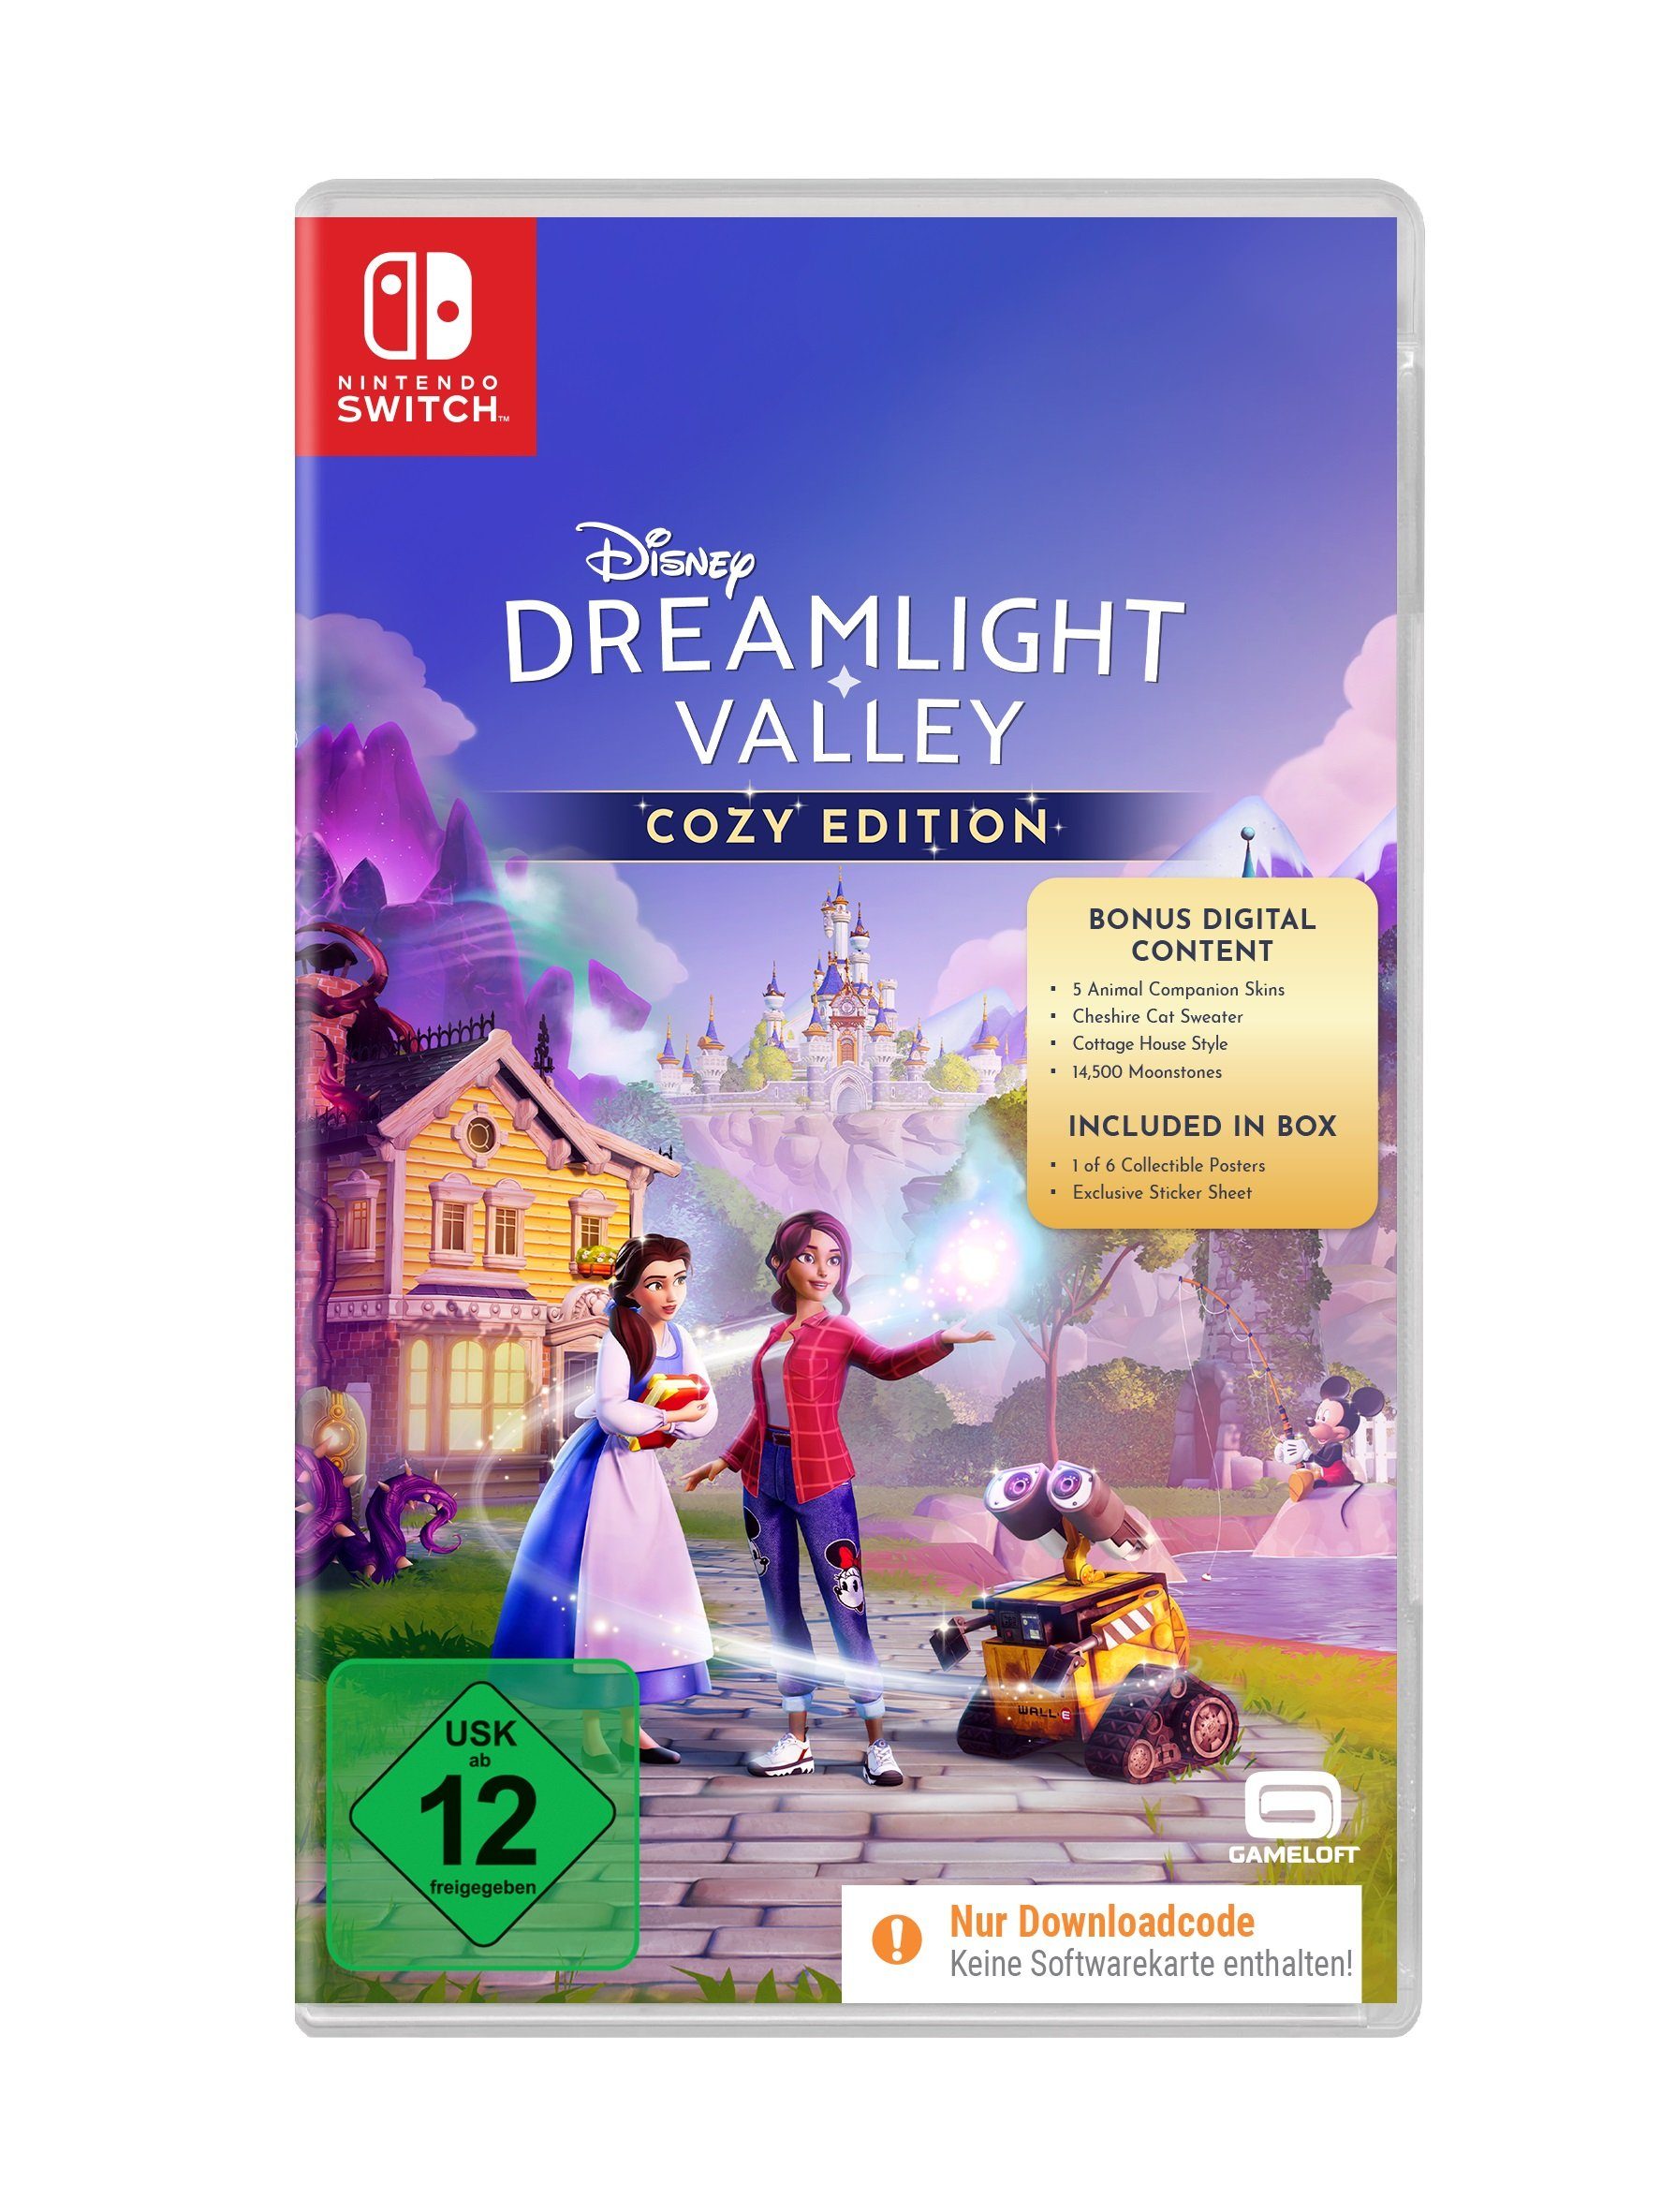 Nighthawk Disney Dreamlight Valley: Cozy a (Code Switch Box) Nintendo Edition in